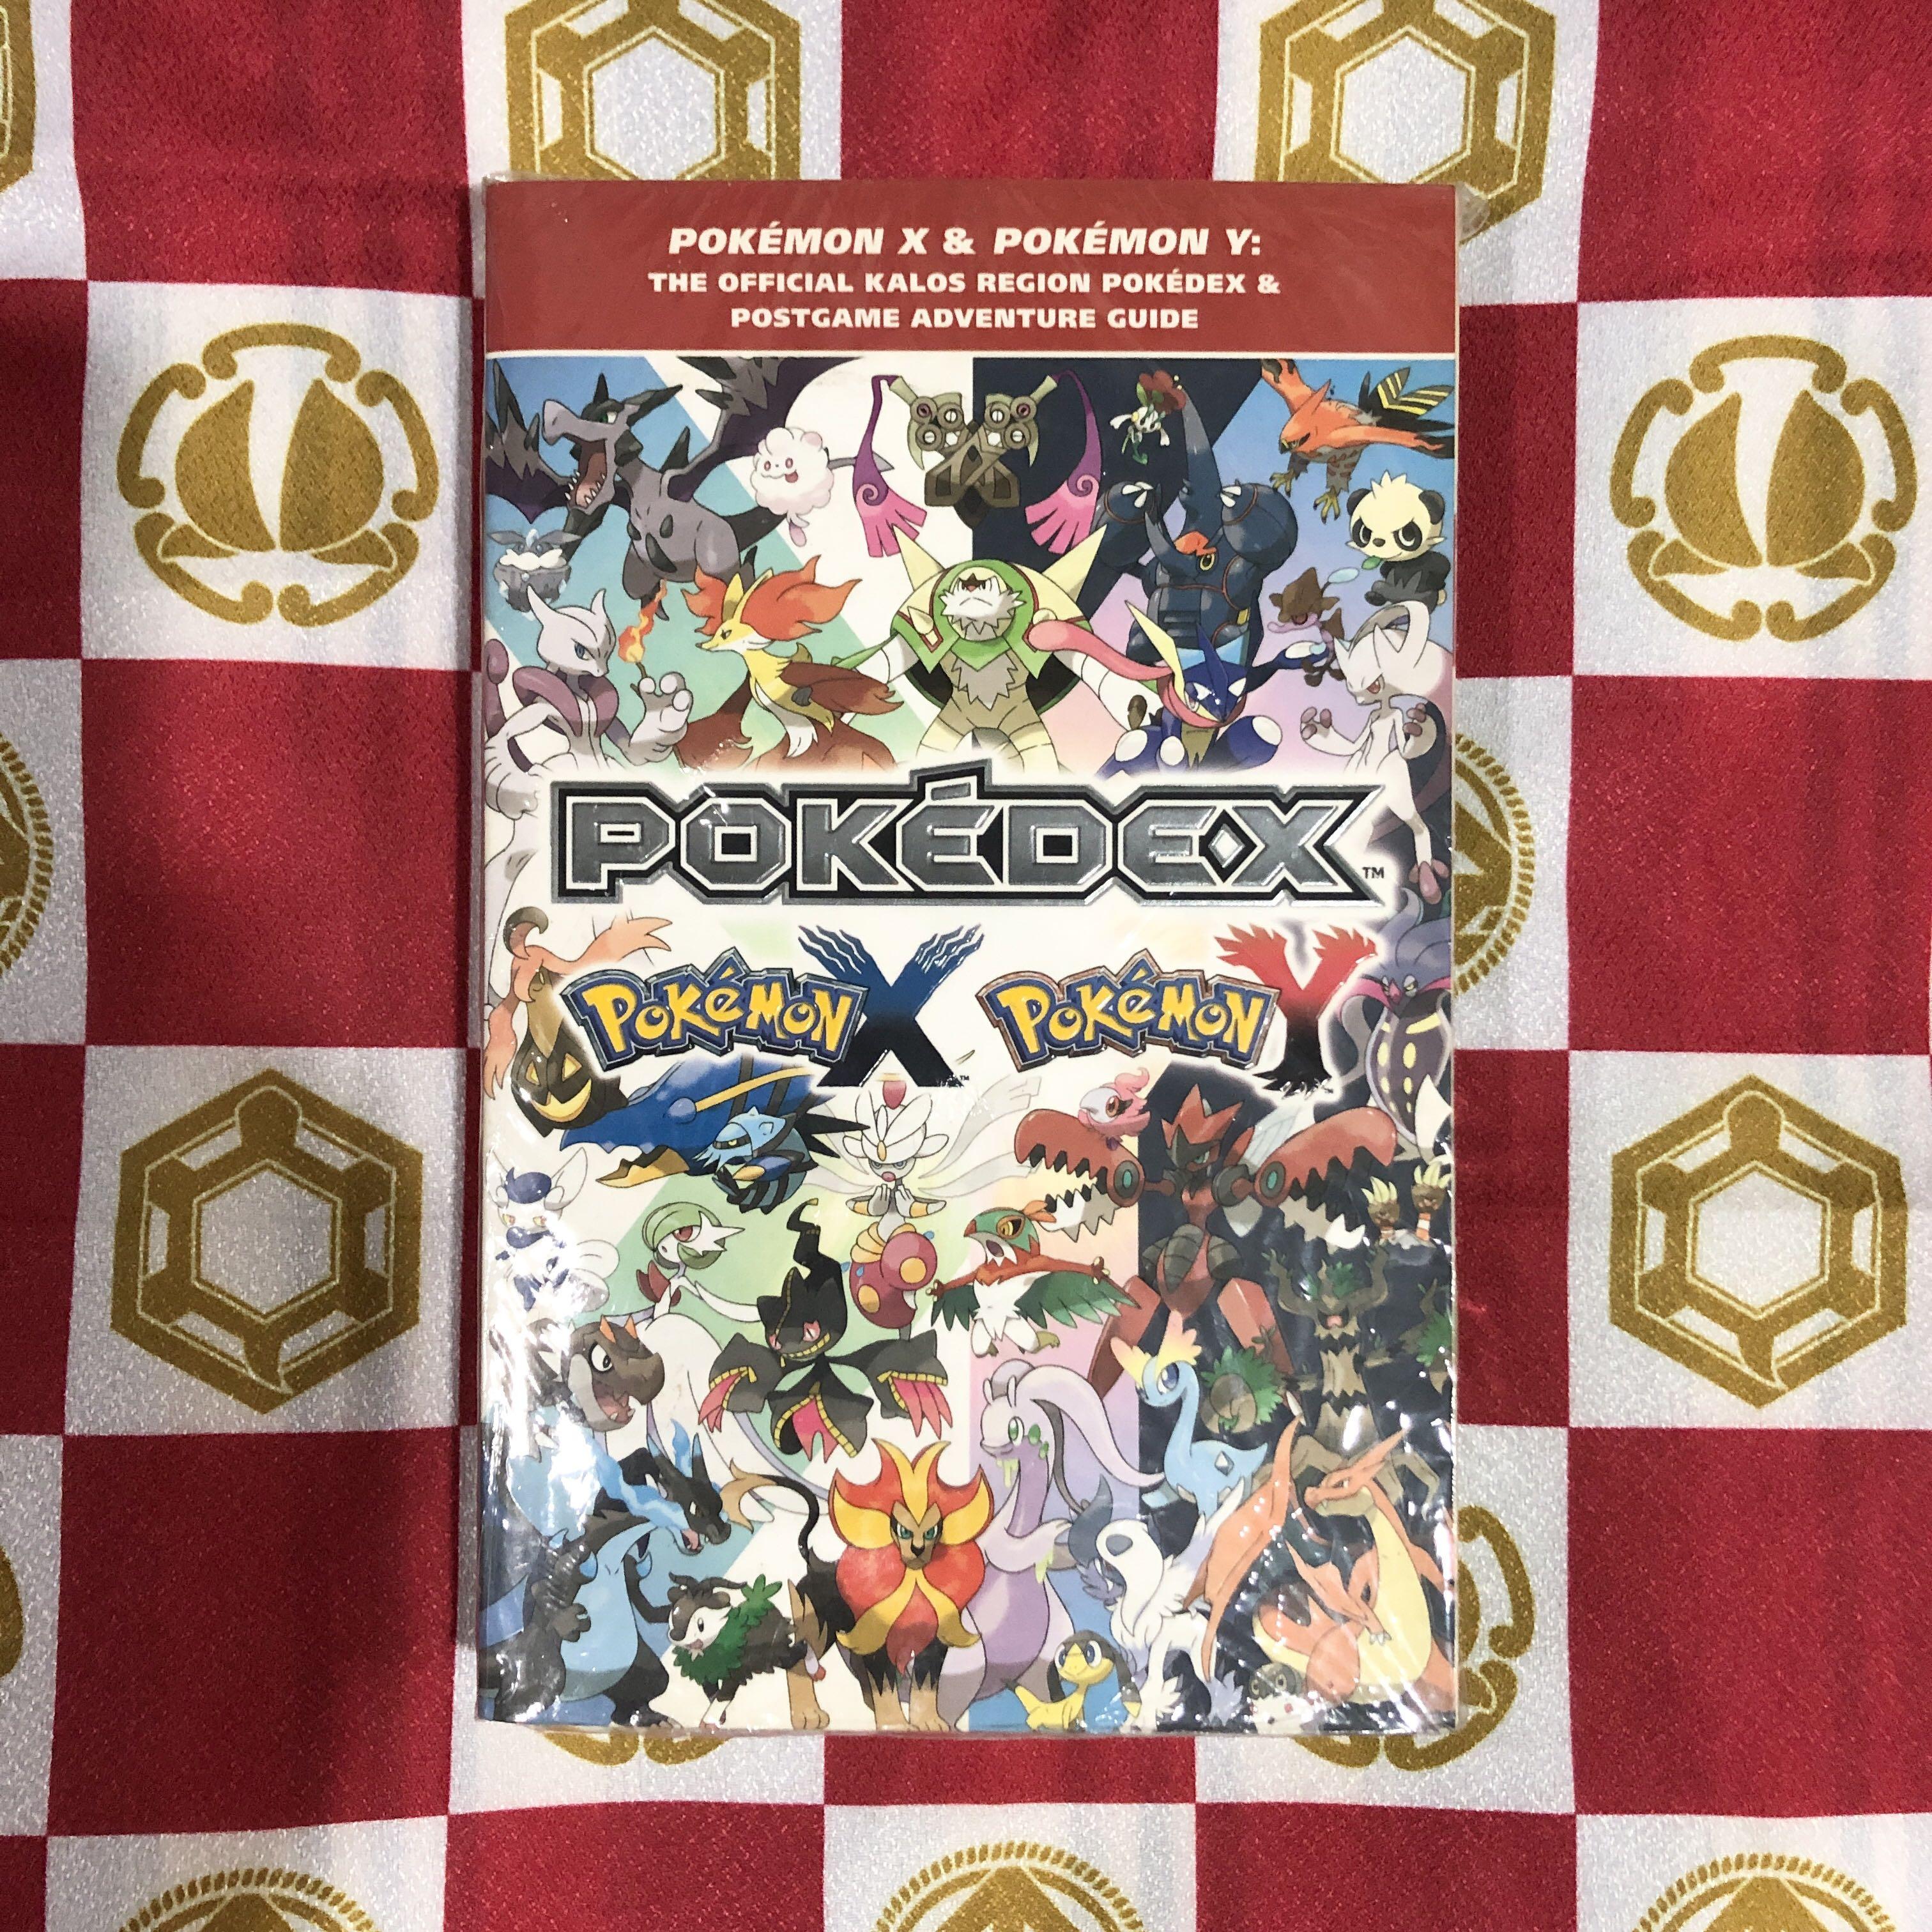 Pokemon X & Pokemon Y: The Official Kalos Region Pokedex